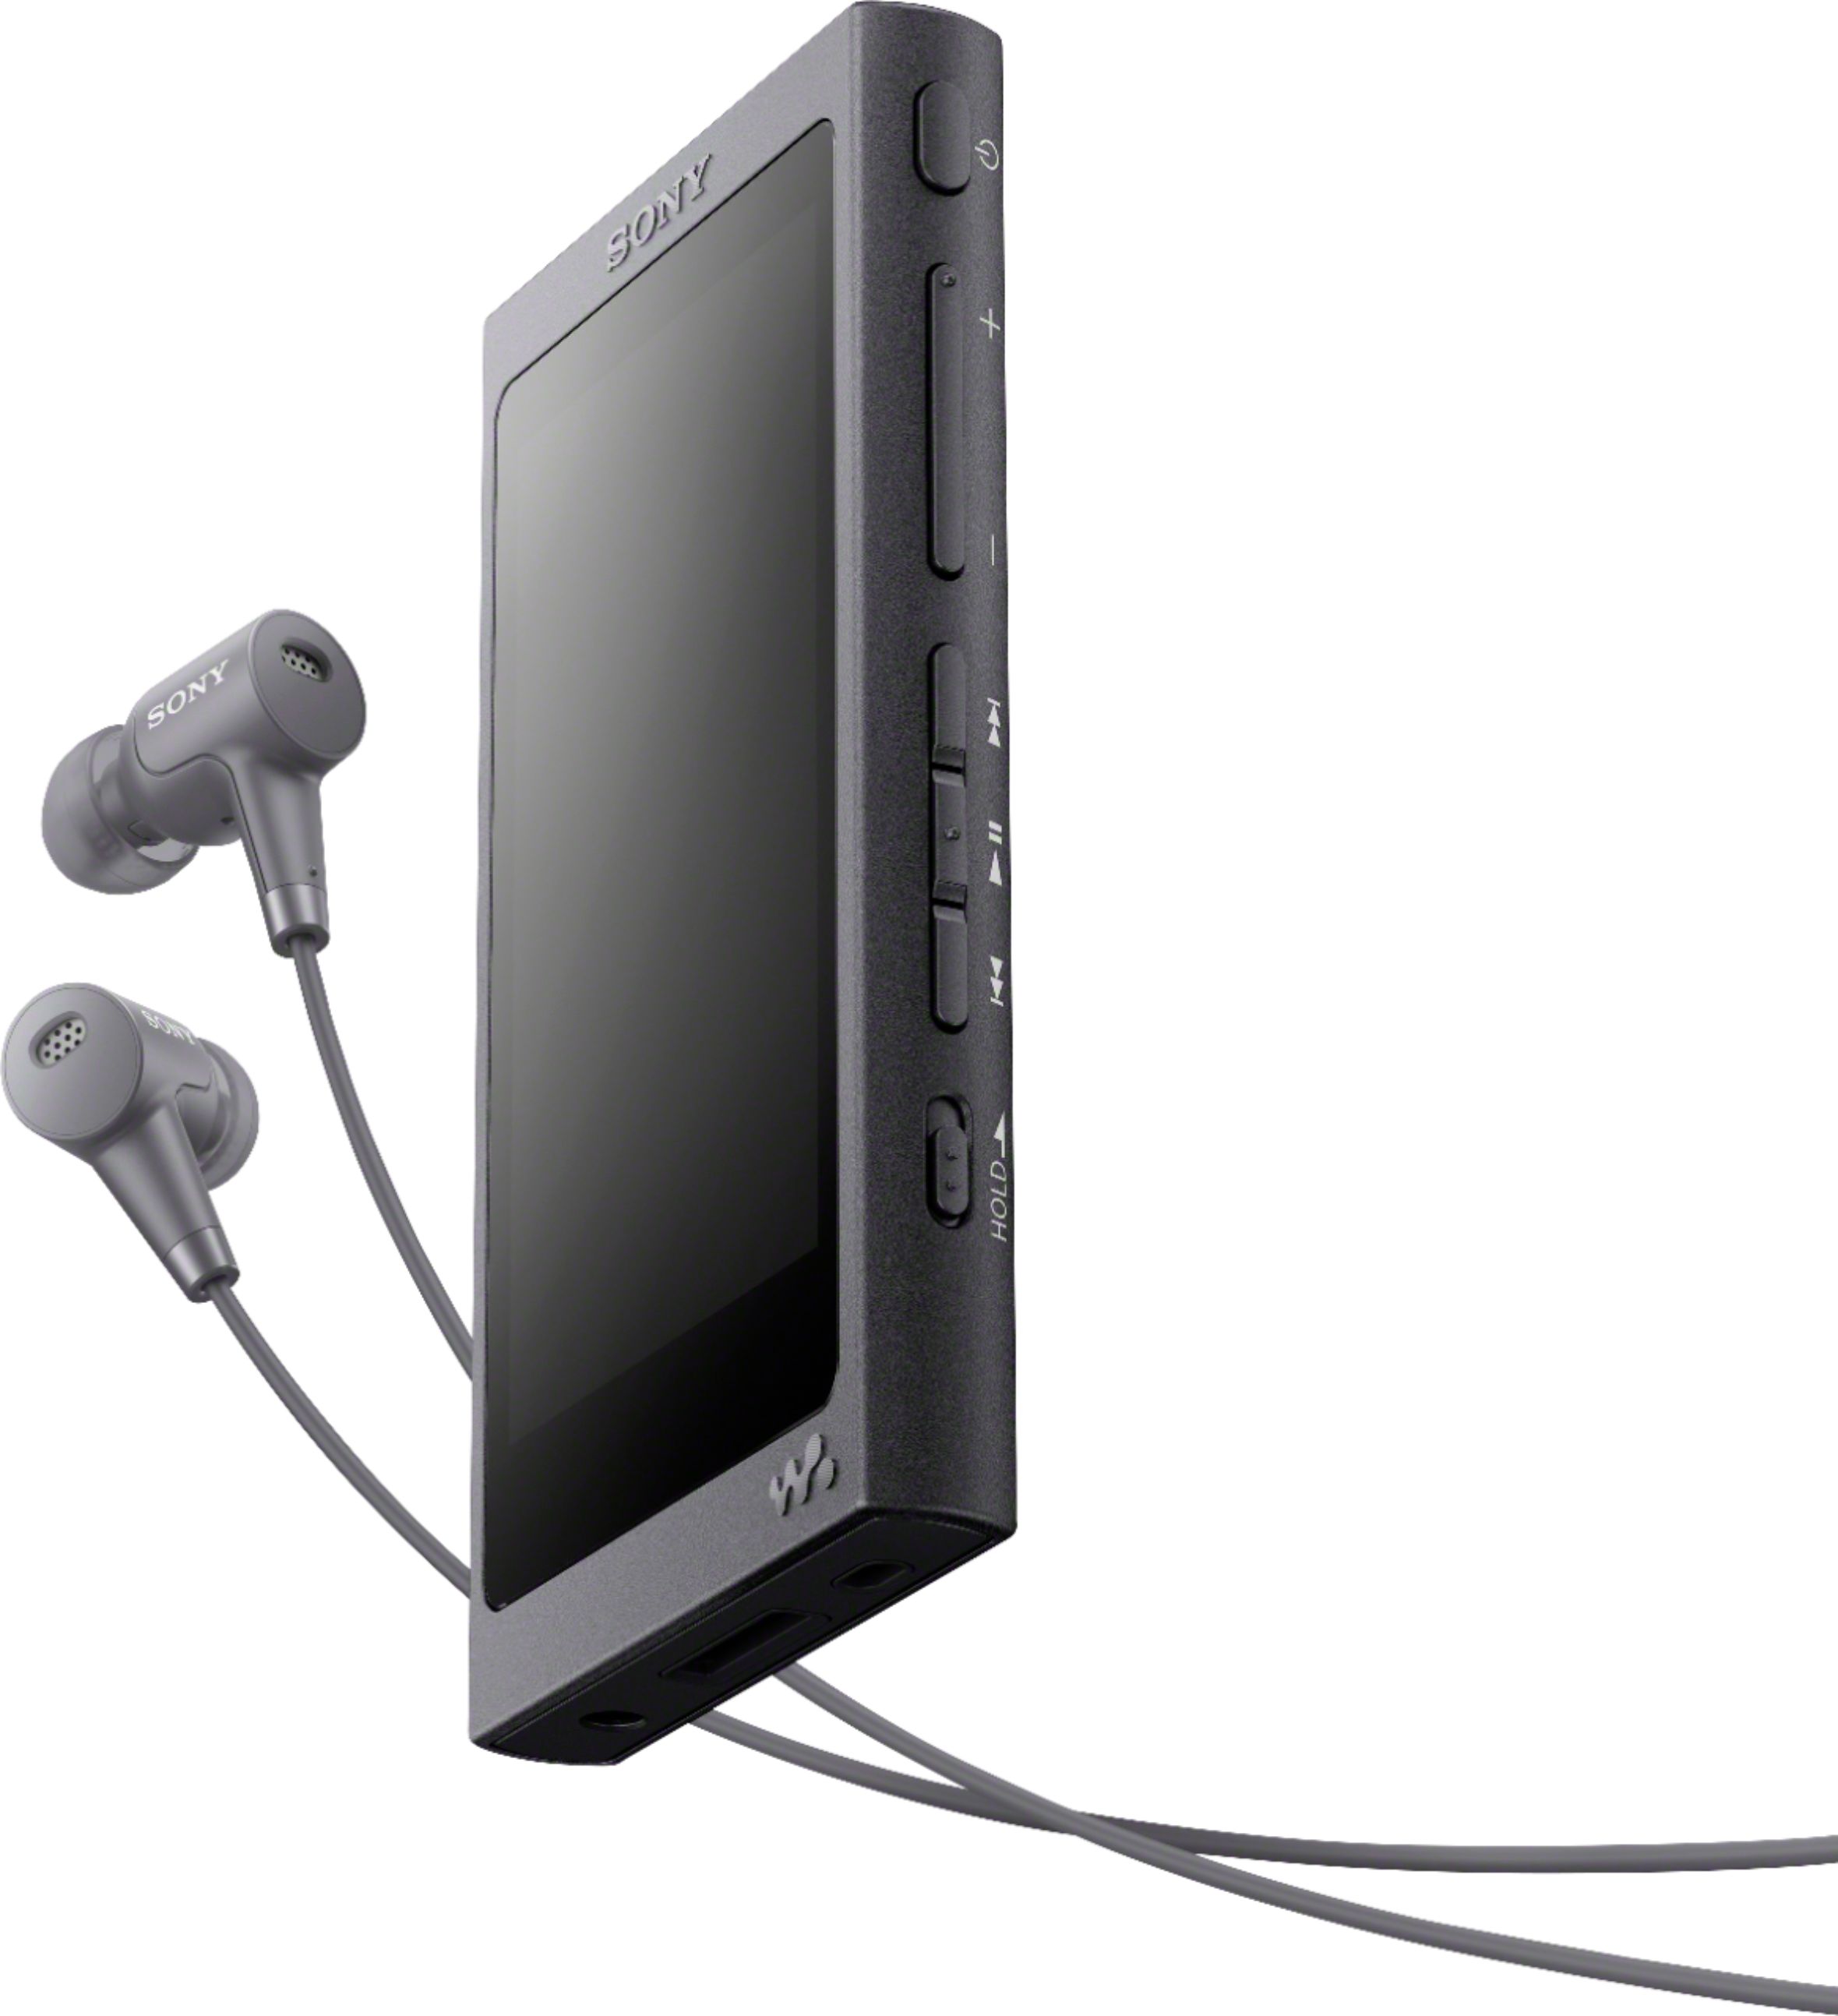 Best Buy: Sony Walkman Hi-Res NW-A45 16GB* MP3 Player Grayish 